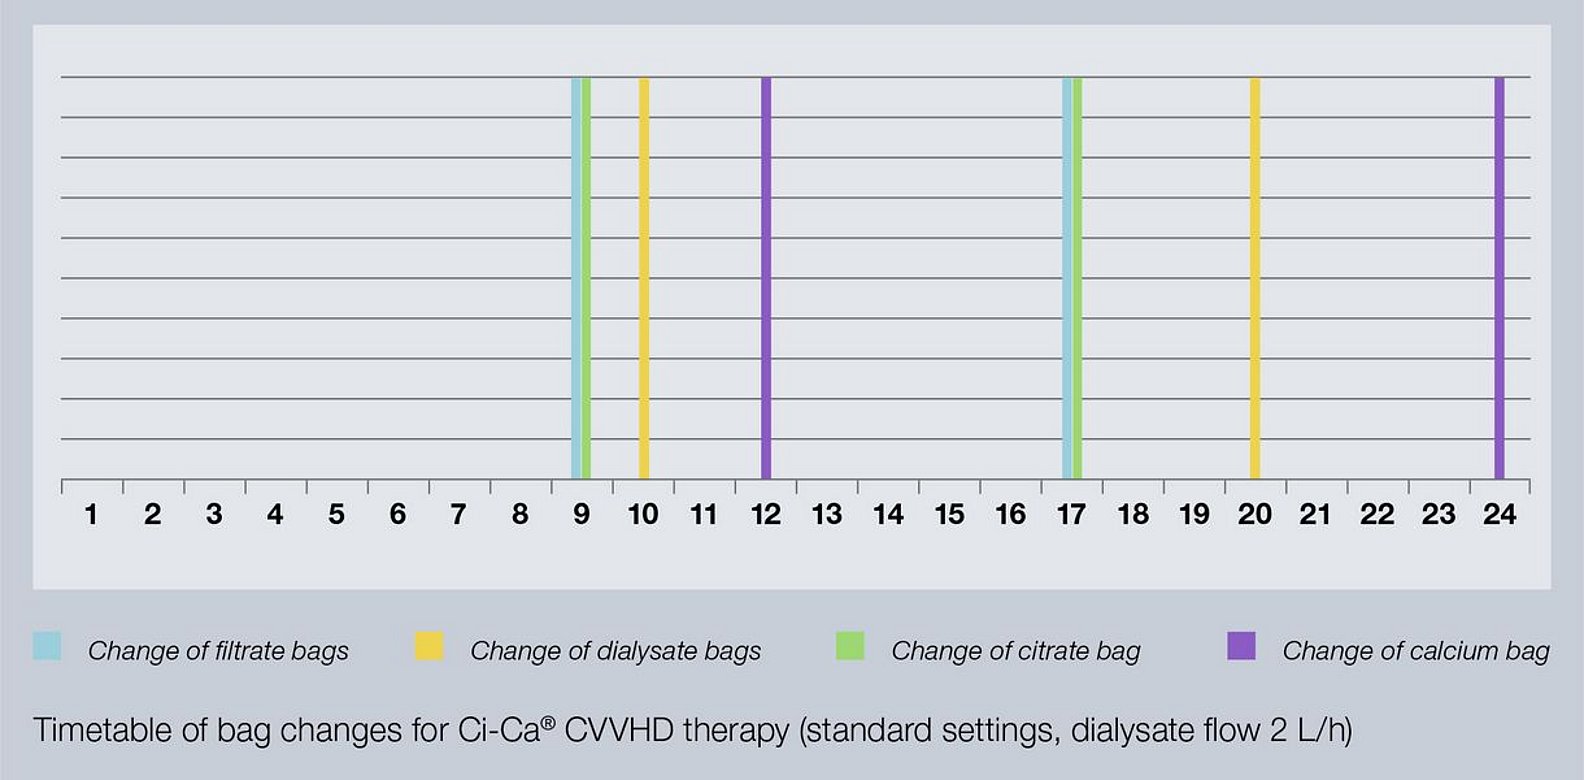 Zeitplan der Beutelwechsel einer Ci-Ca® CVVHD Behandlung